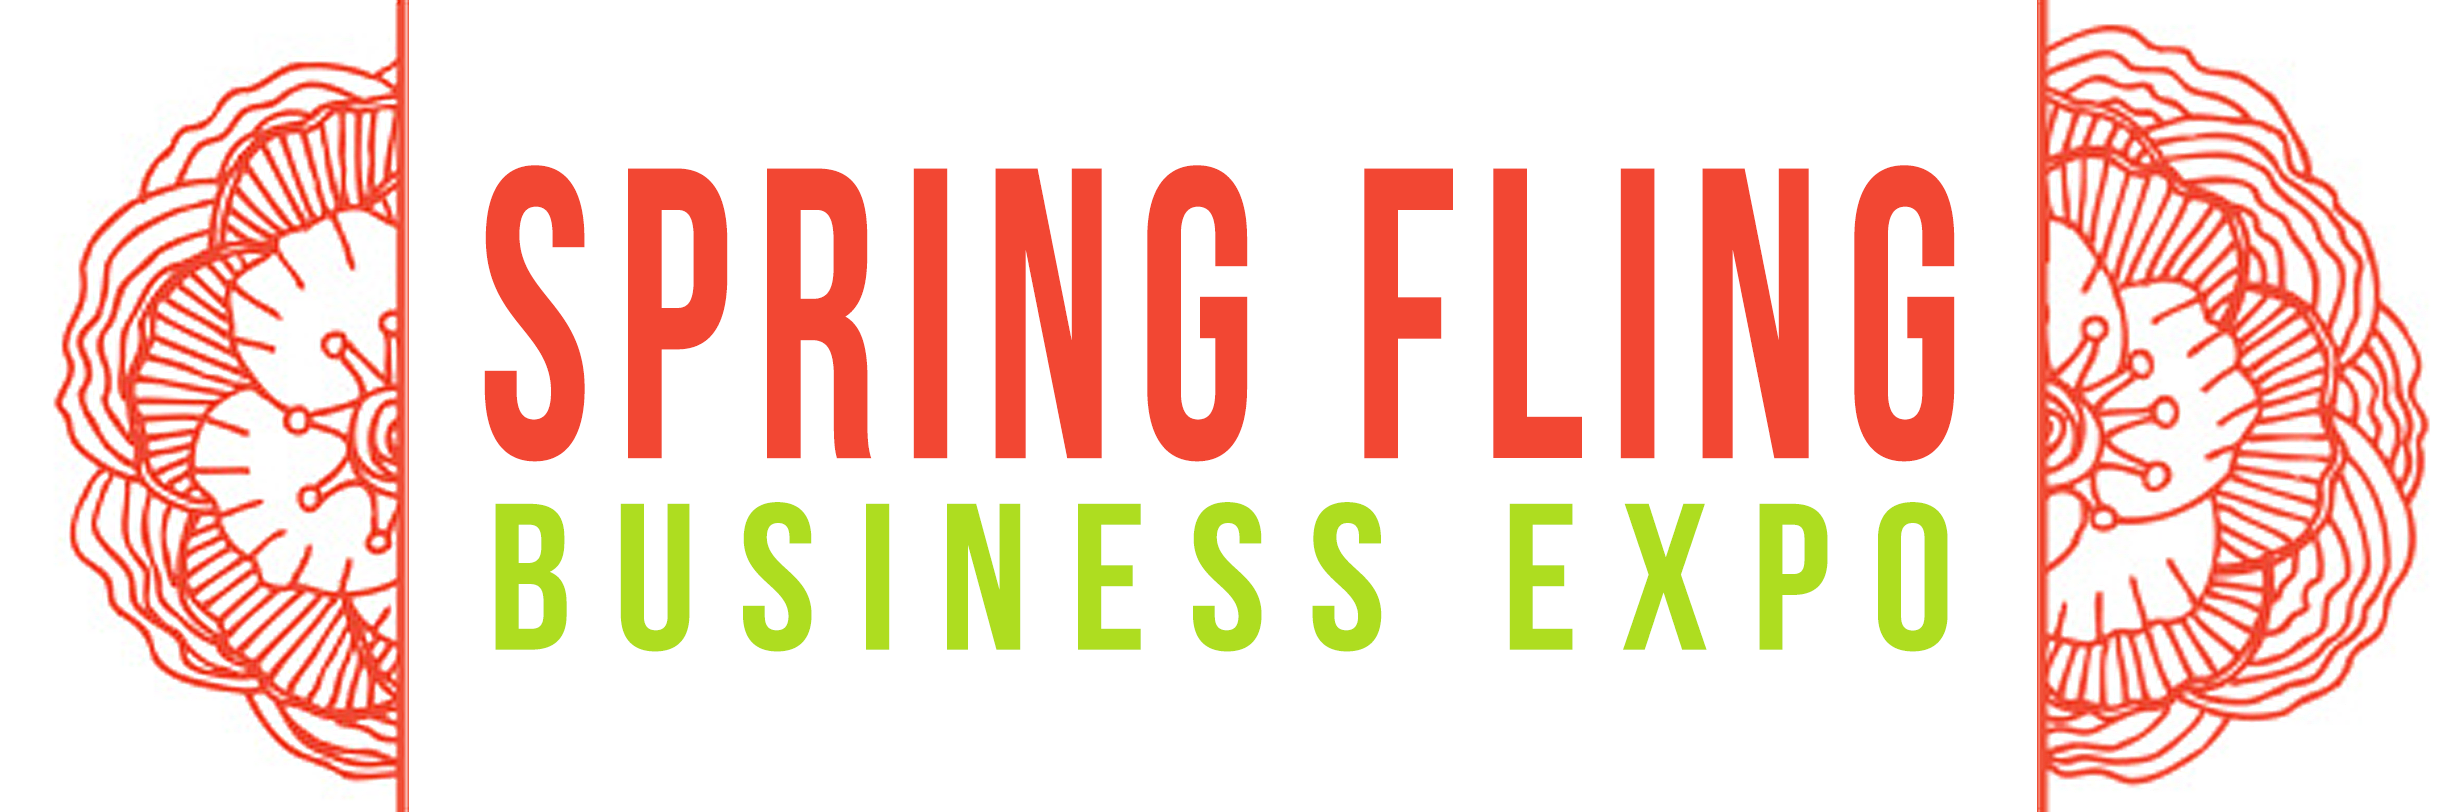 Spring Fling - Business Expo Banner